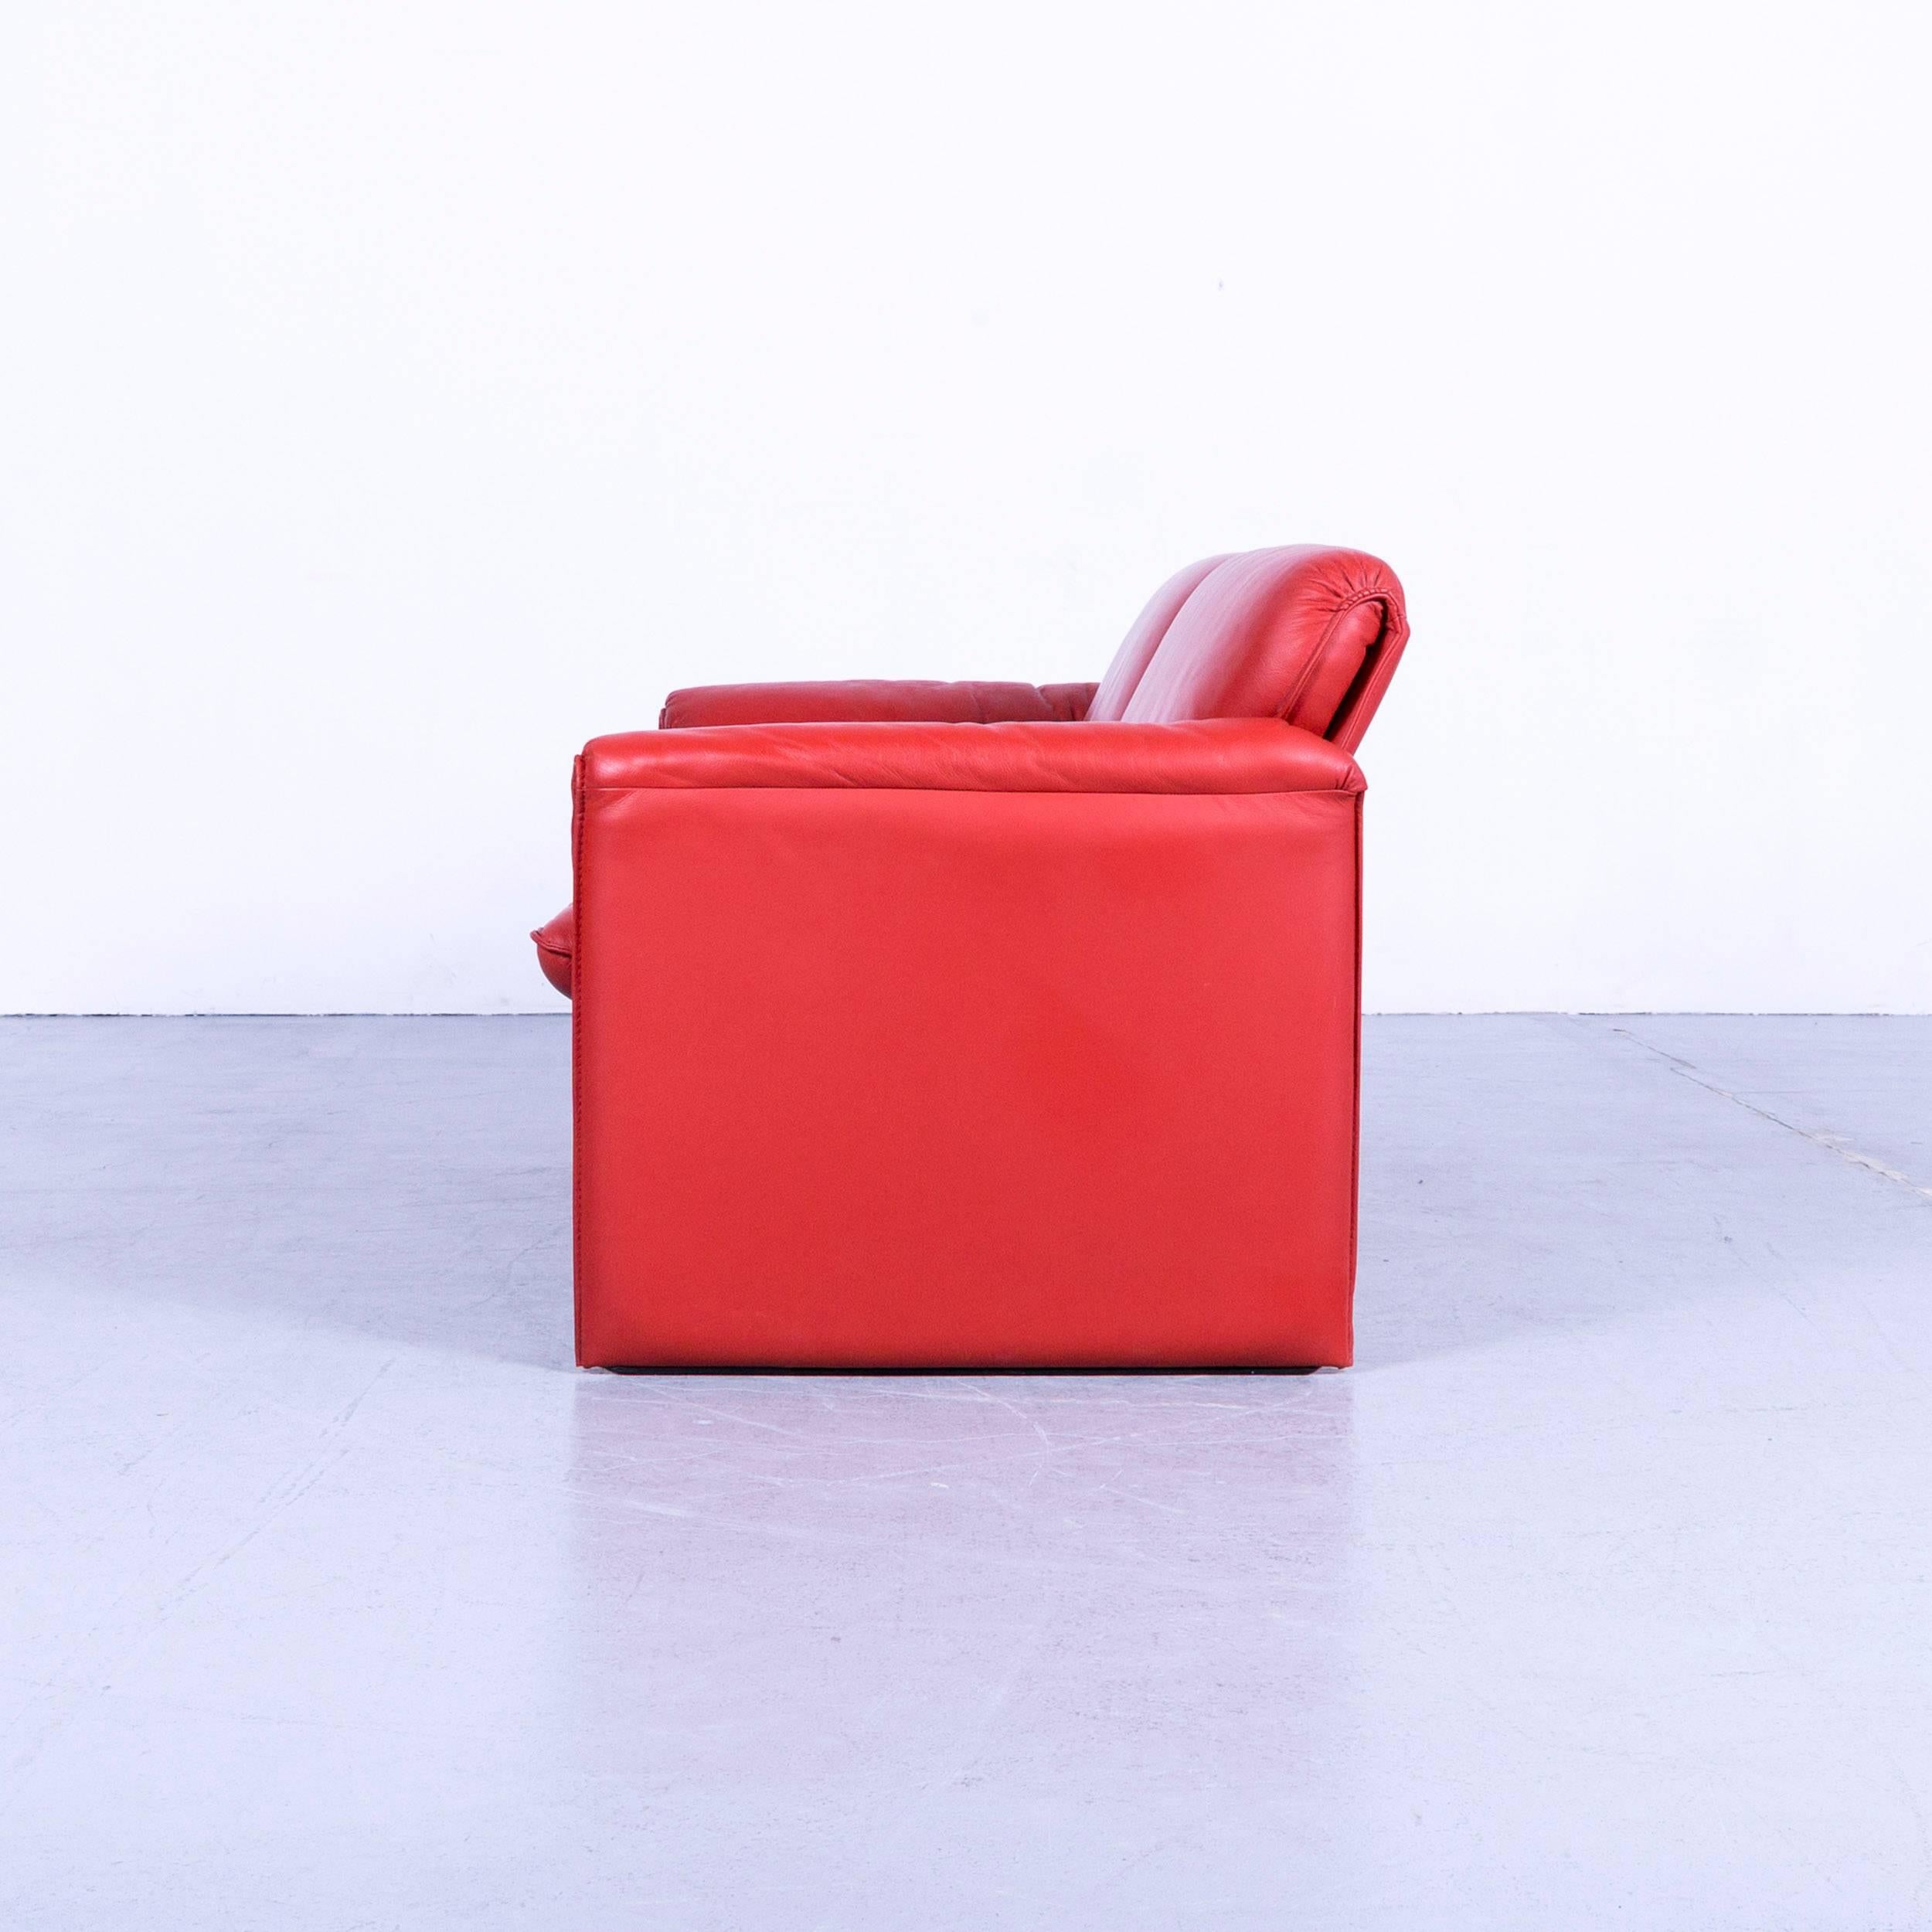 Leolux Bora Designer Sofa Leather Orange Red Two-Seat Couch Modern For Sale 4